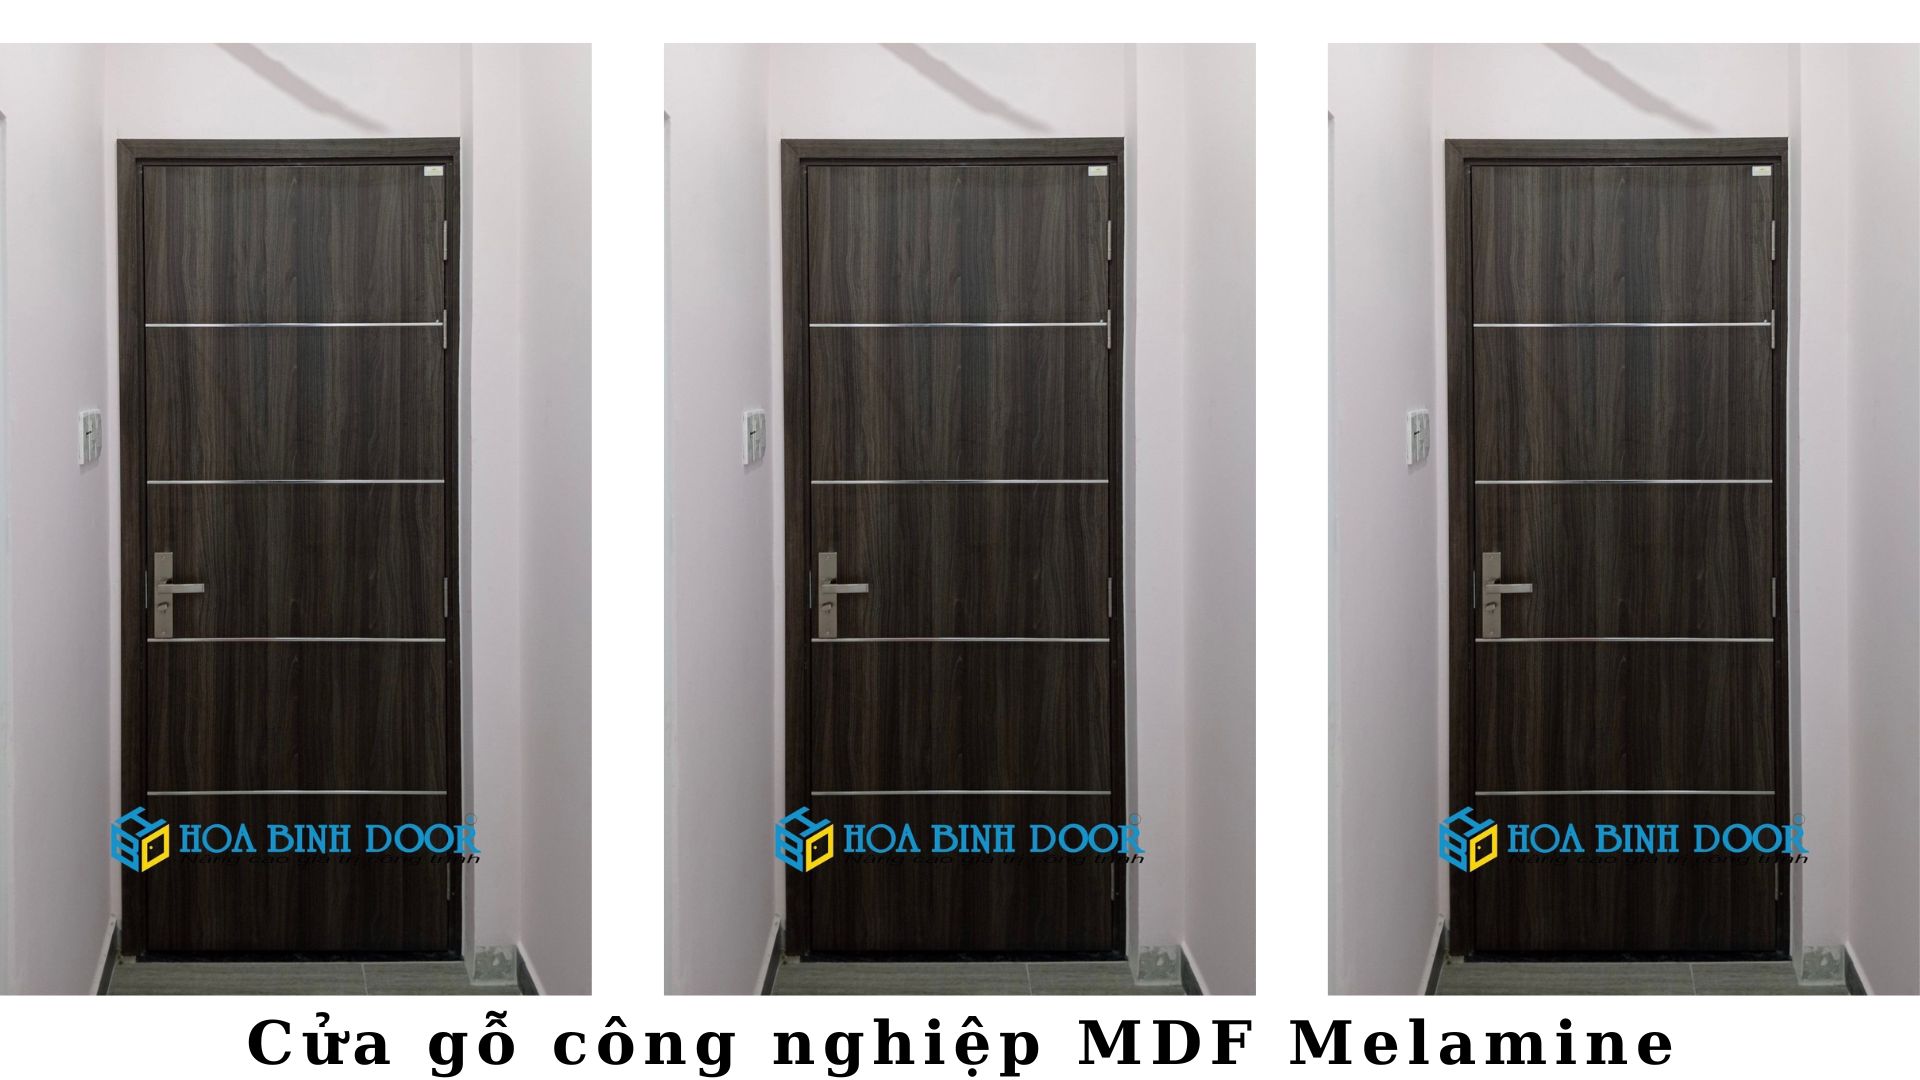 Cửa MDF Melamine tại Tân Phú - Cửa thông phòng